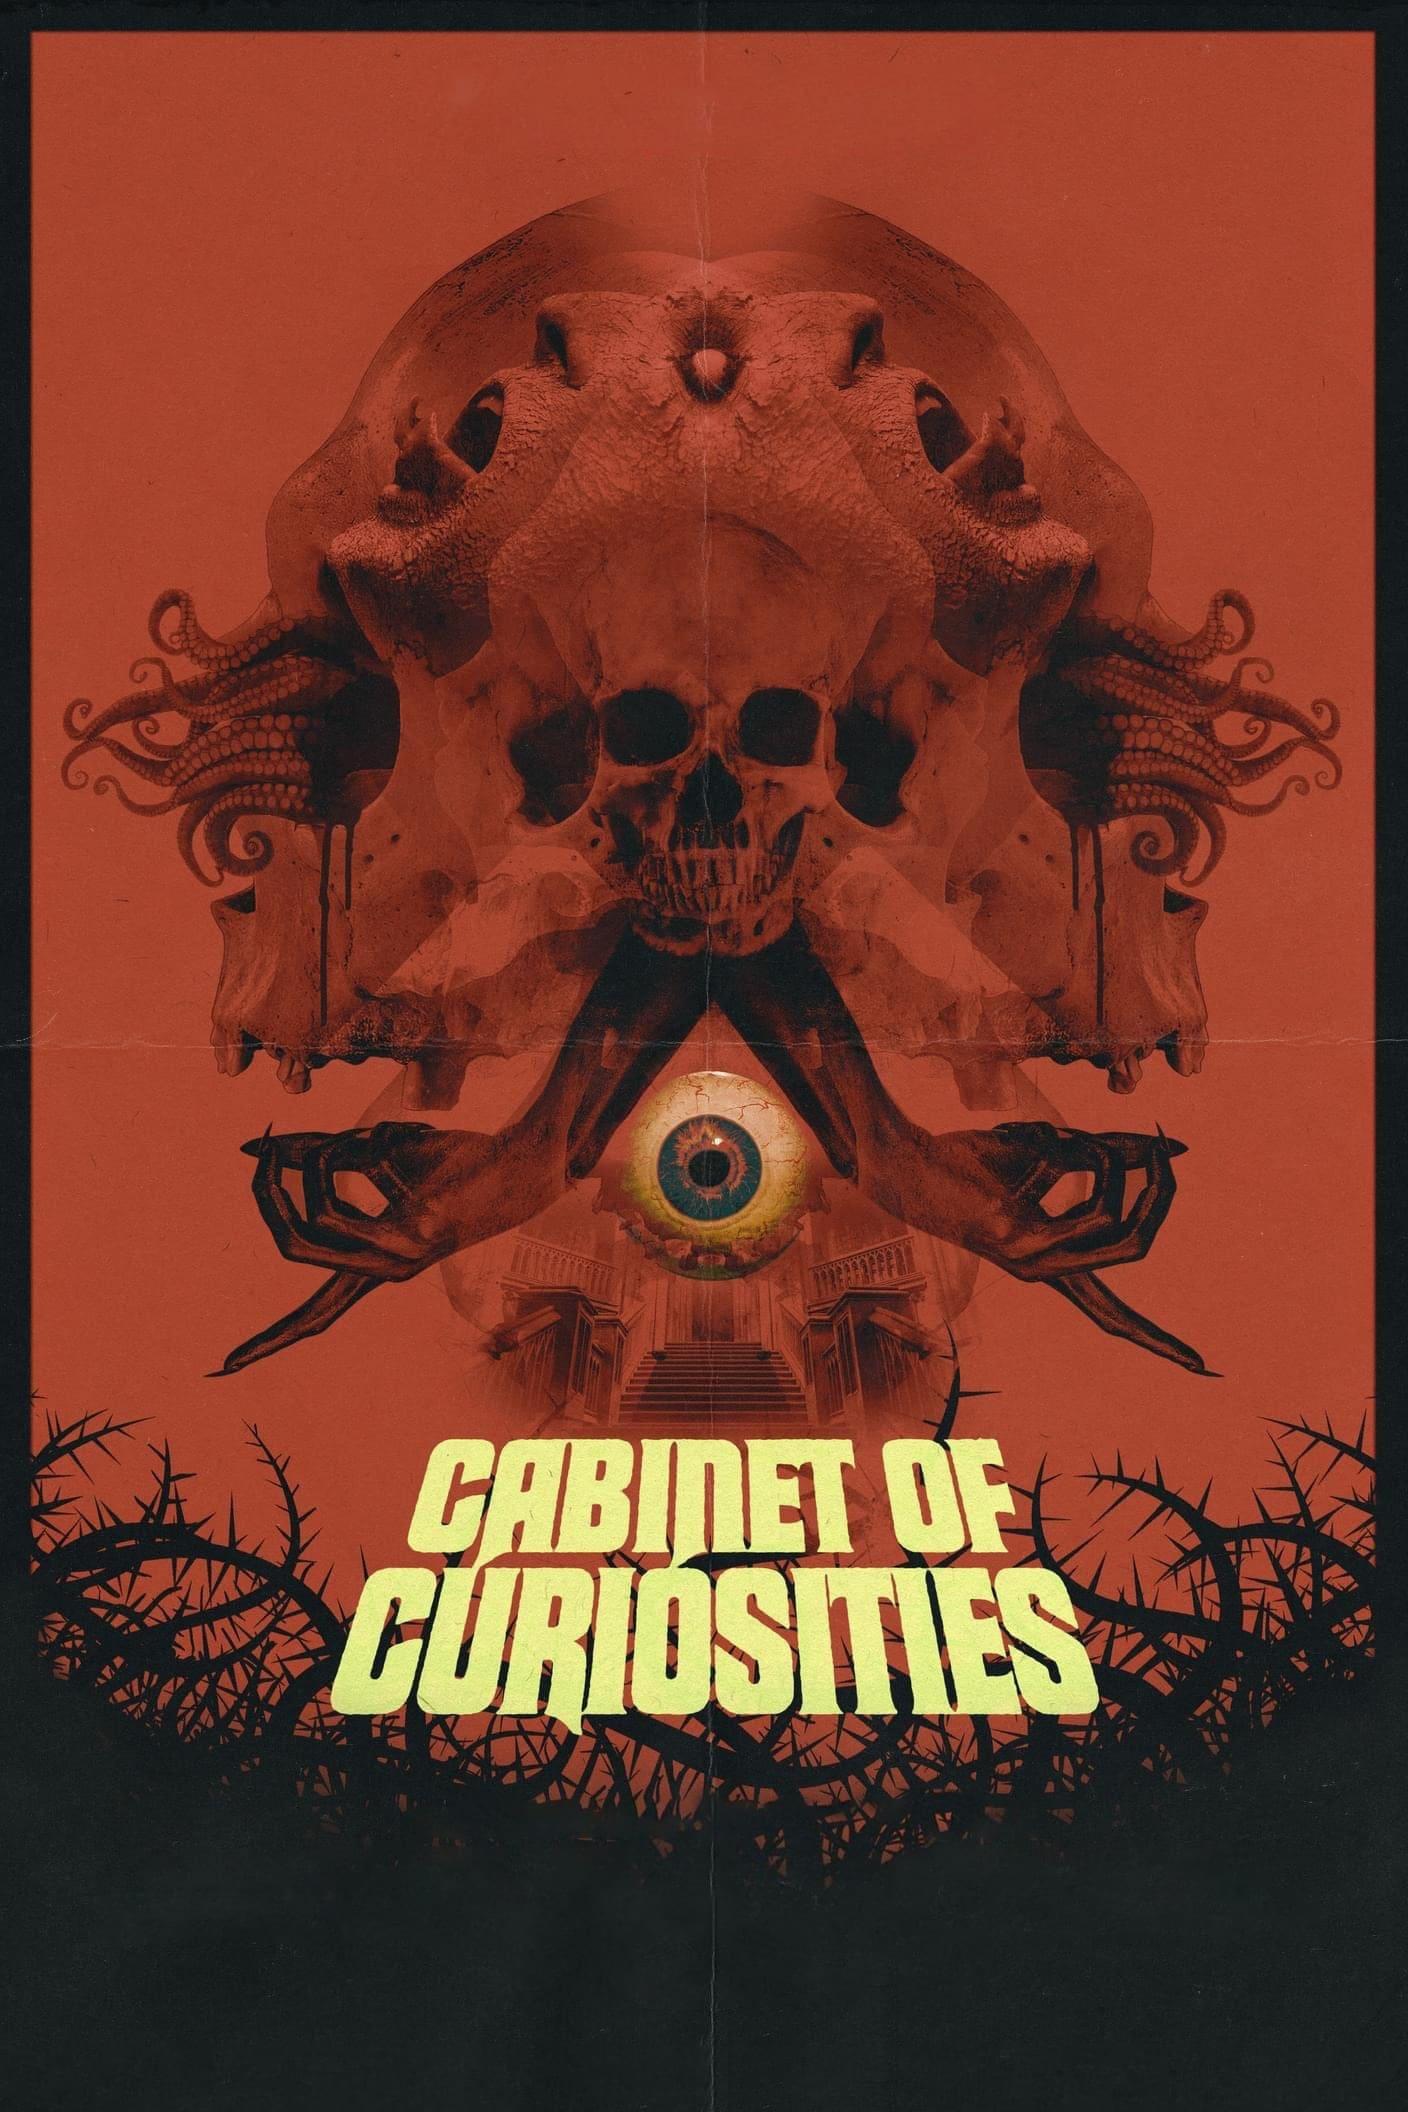 Guillermo del Toro's Cabinet of Curiosities poster